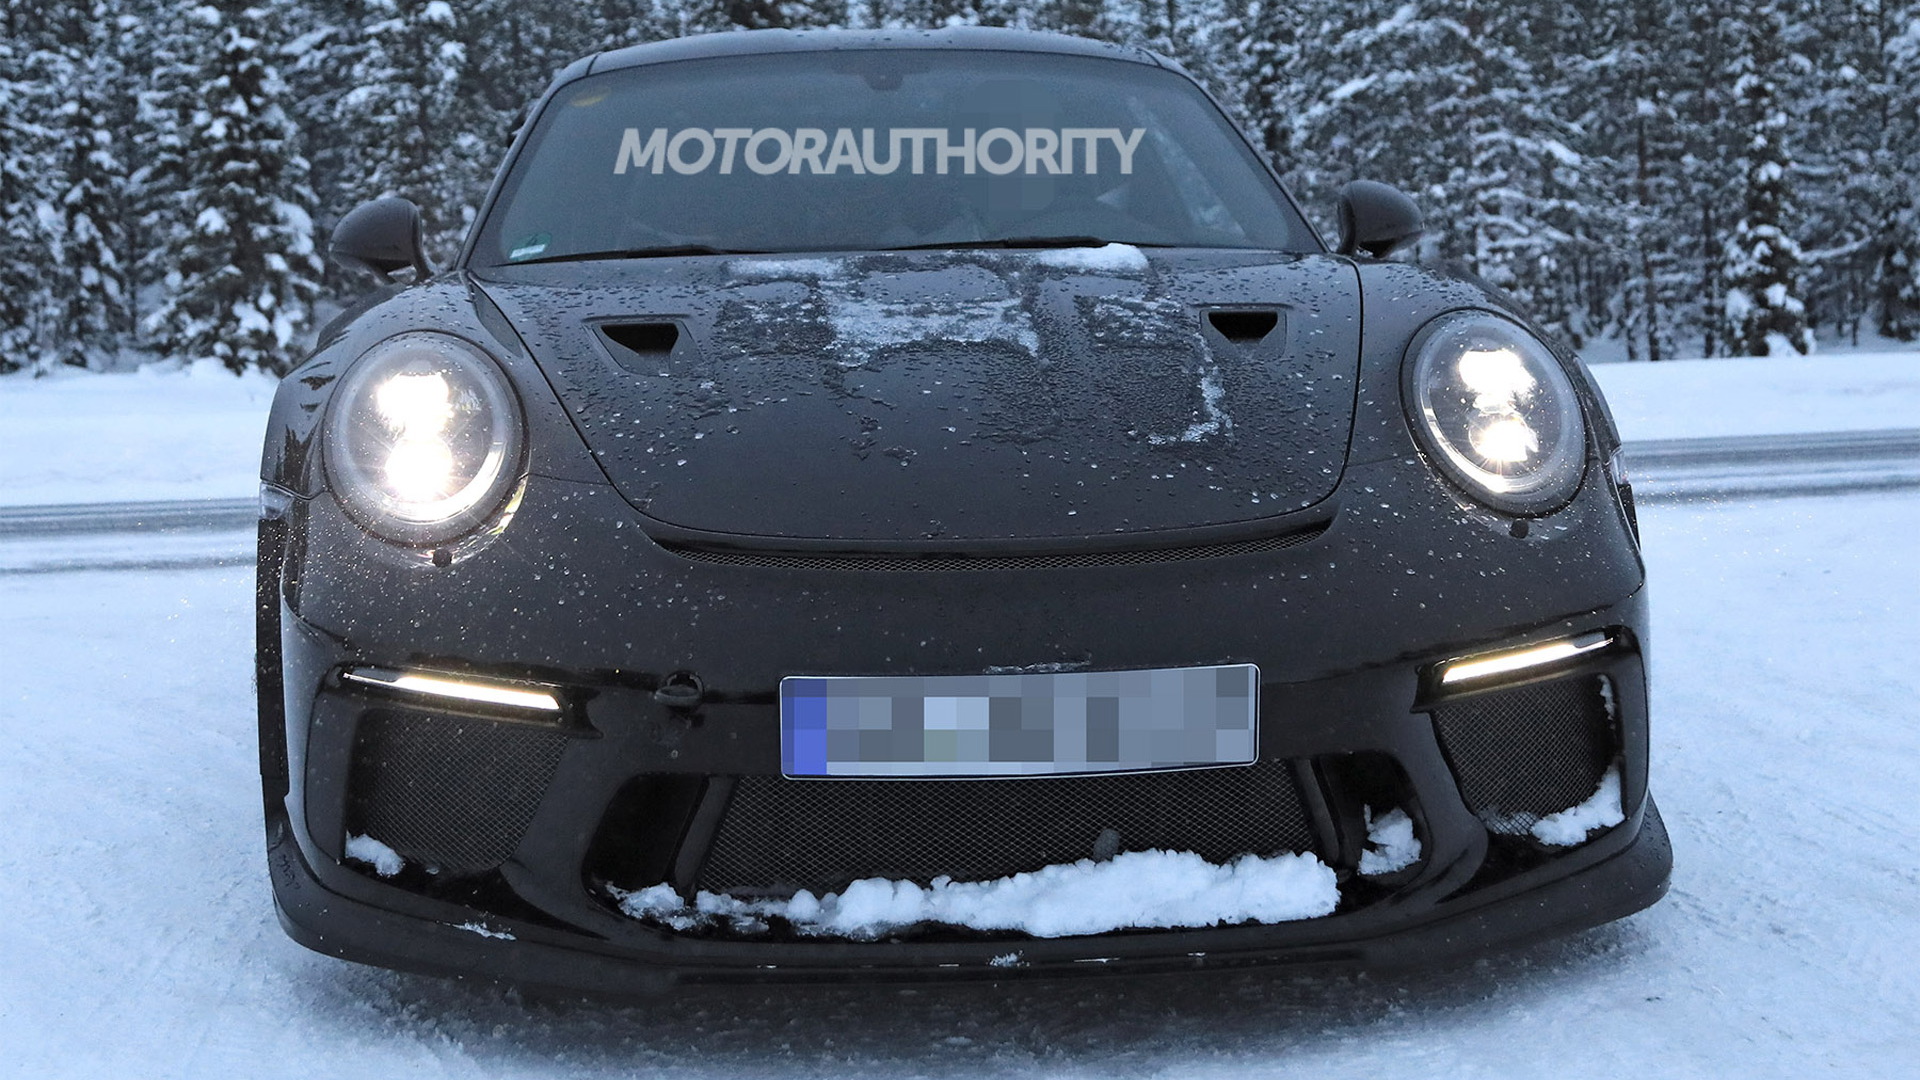 2018 Porsche 911 GT3 RS facelift spy shots - Image via S. Baldauf/SB-Medien